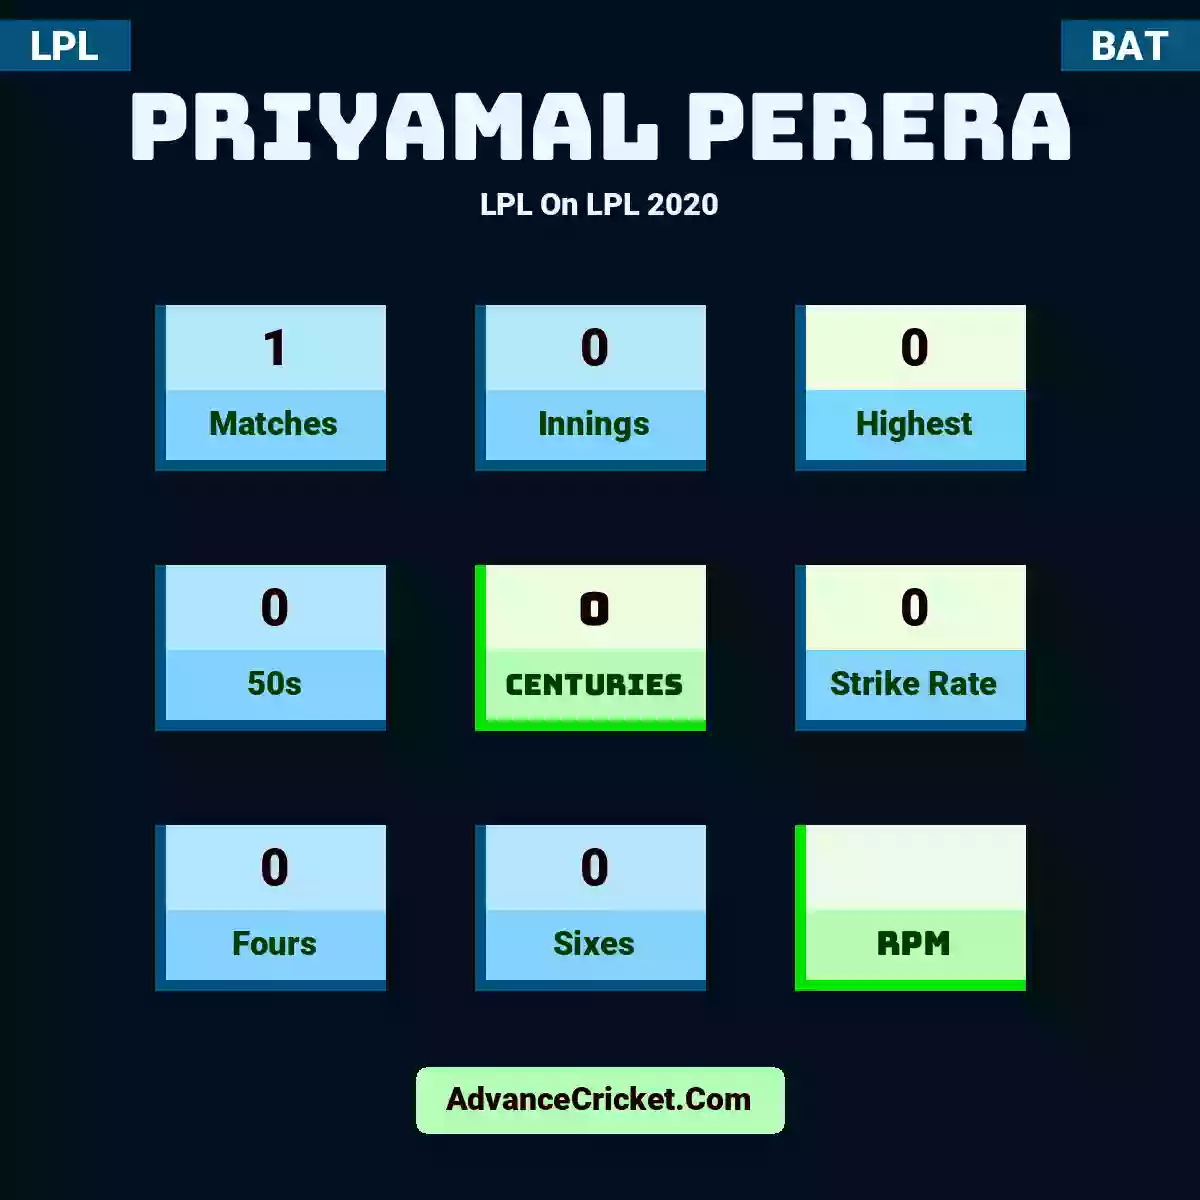 Priyamal Perera LPL  On LPL 2020, Priyamal Perera played 1 matches, scored 0 runs as highest, 0 half-centuries, and 0 centuries, with a strike rate of 0. P.Perera hit 0 fours and 0 sixes.